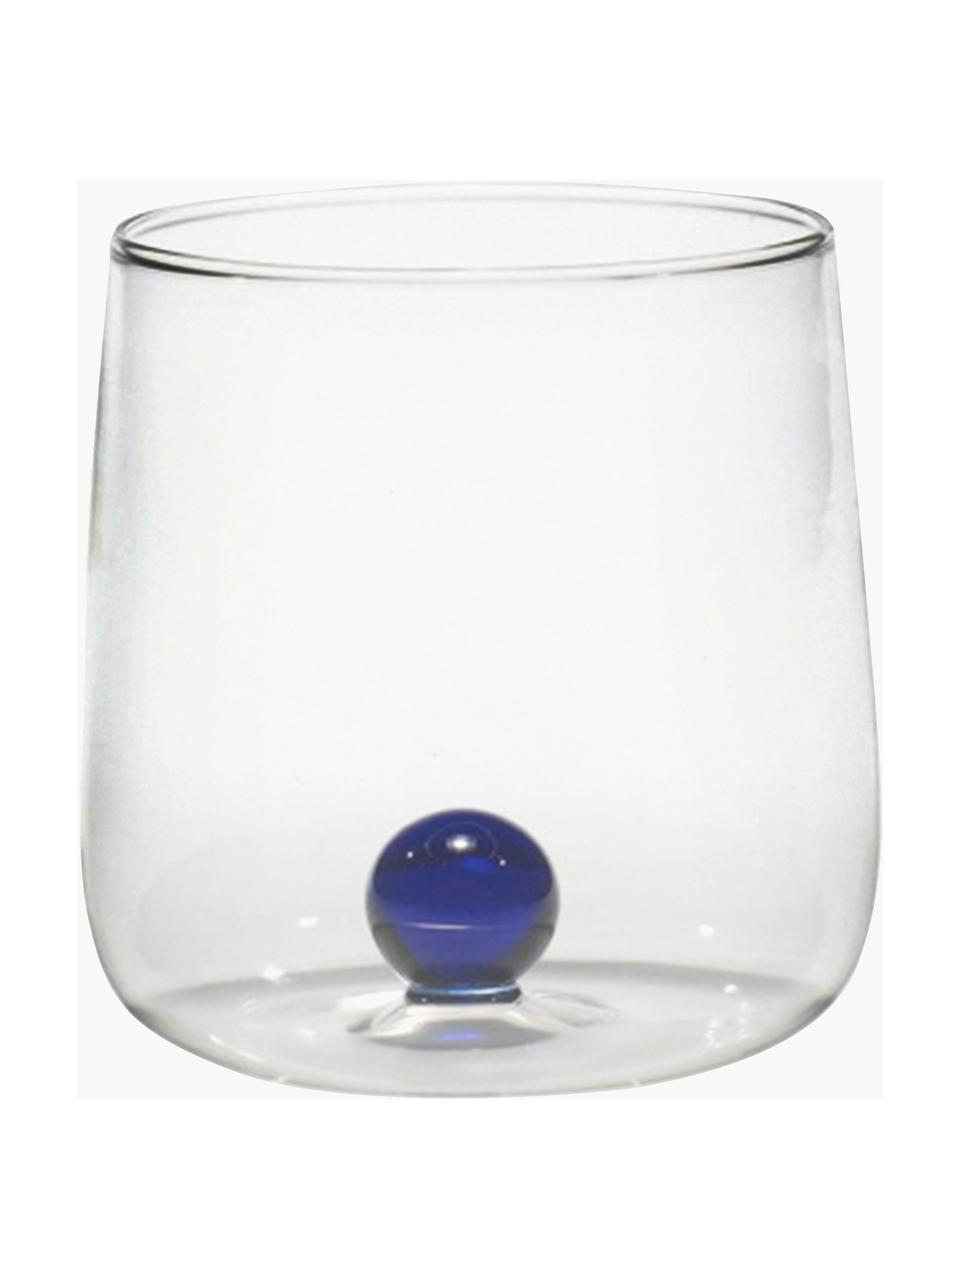 Mondgeblazen waterglazen Bilia uit borosilicaatglas, 6 stuks, Borosilicaatglas, Transparant, donkerblauw, Ø 9 x H 9 cm, 440 ml